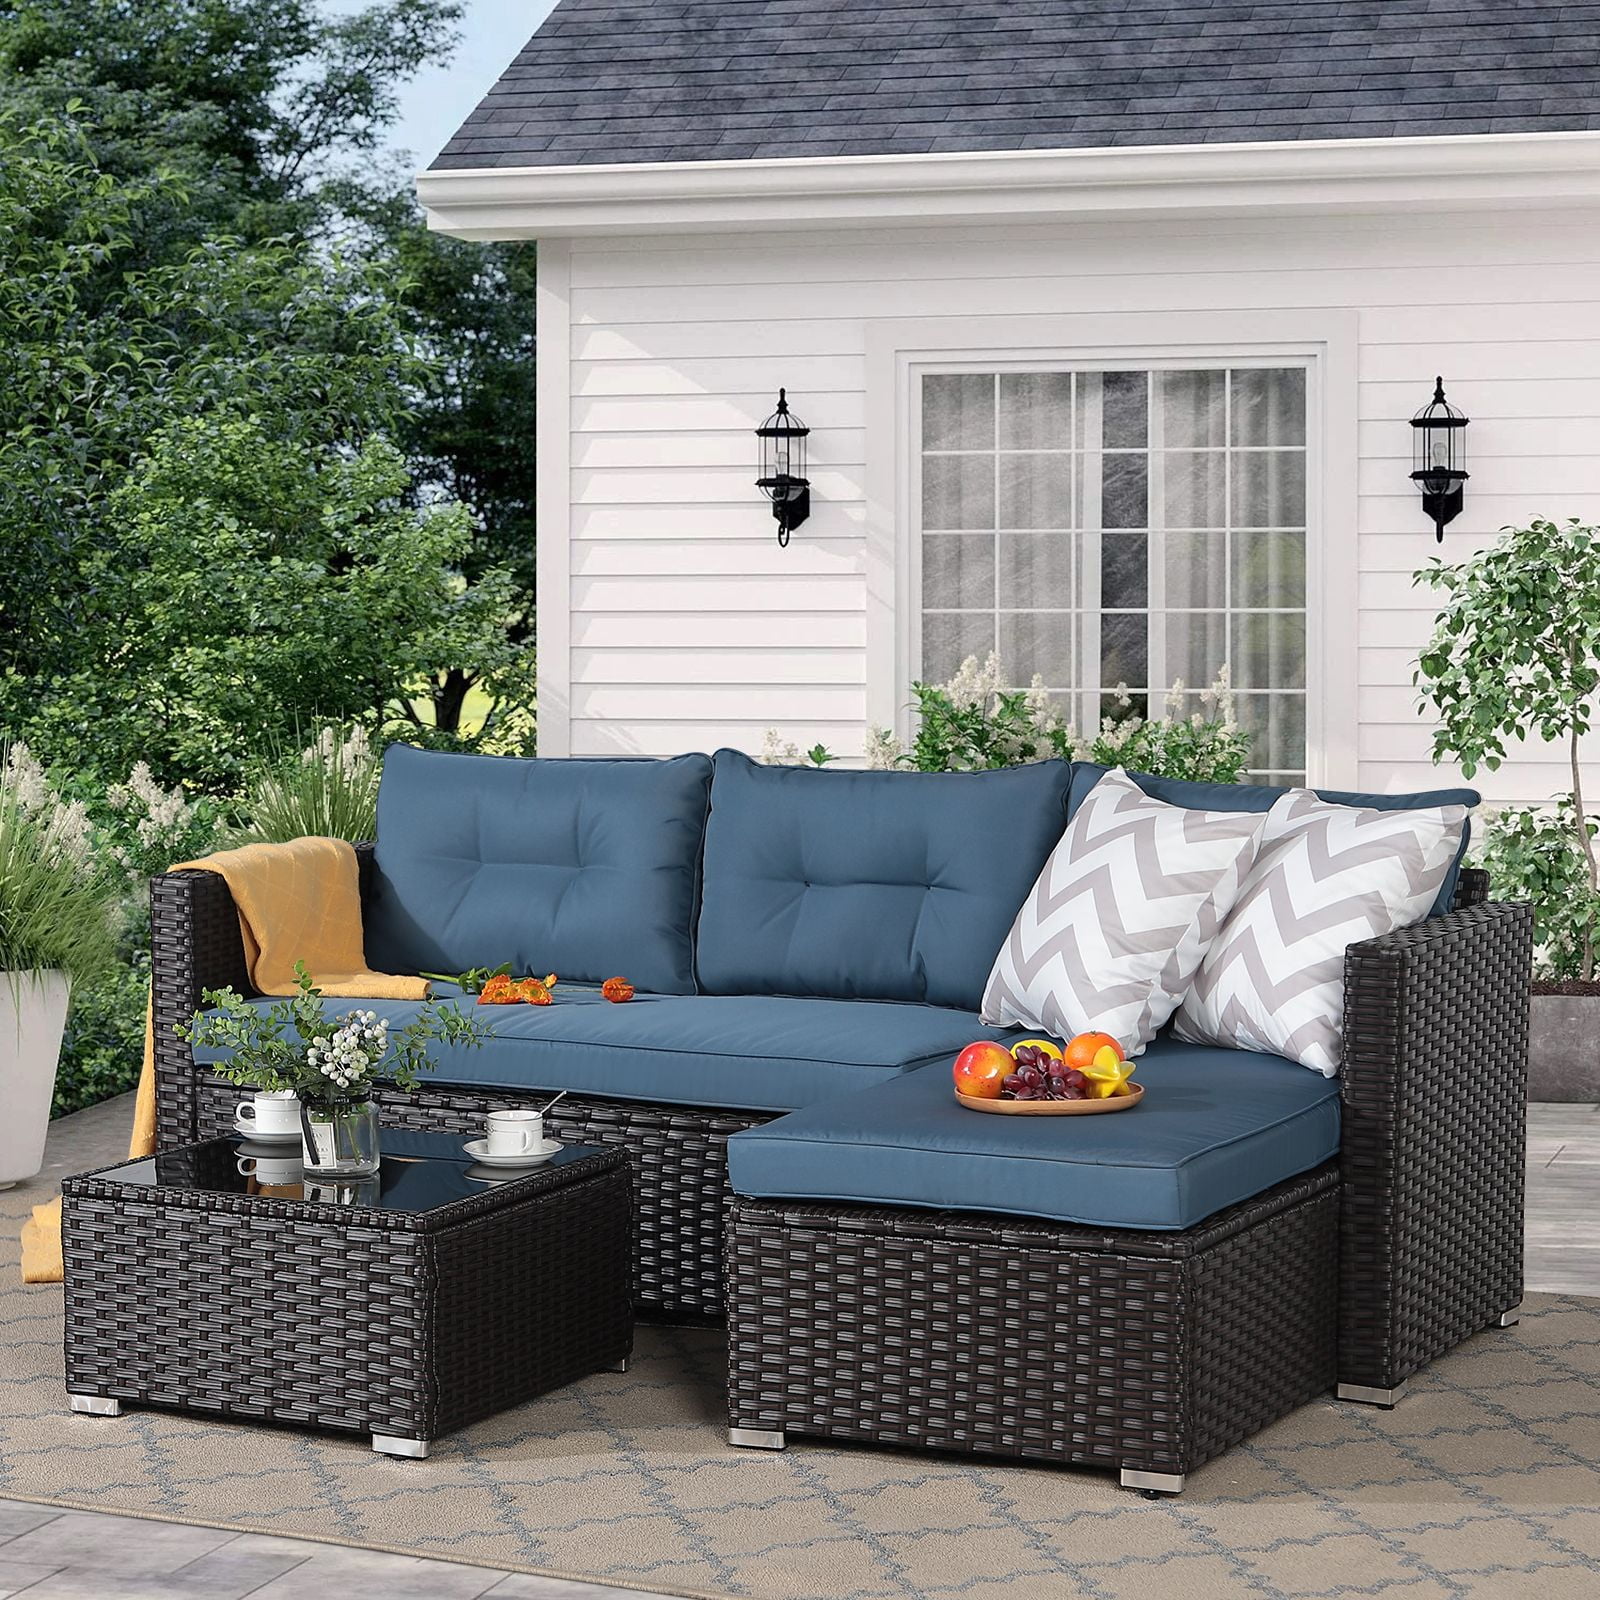 OC Orange-Casual 5-Piece Patio Furniture Set, Outdoor Sectional Sofa, Coffee Table, Dark Brown Rattan & Aegean Blue Cushion - image 1 of 9